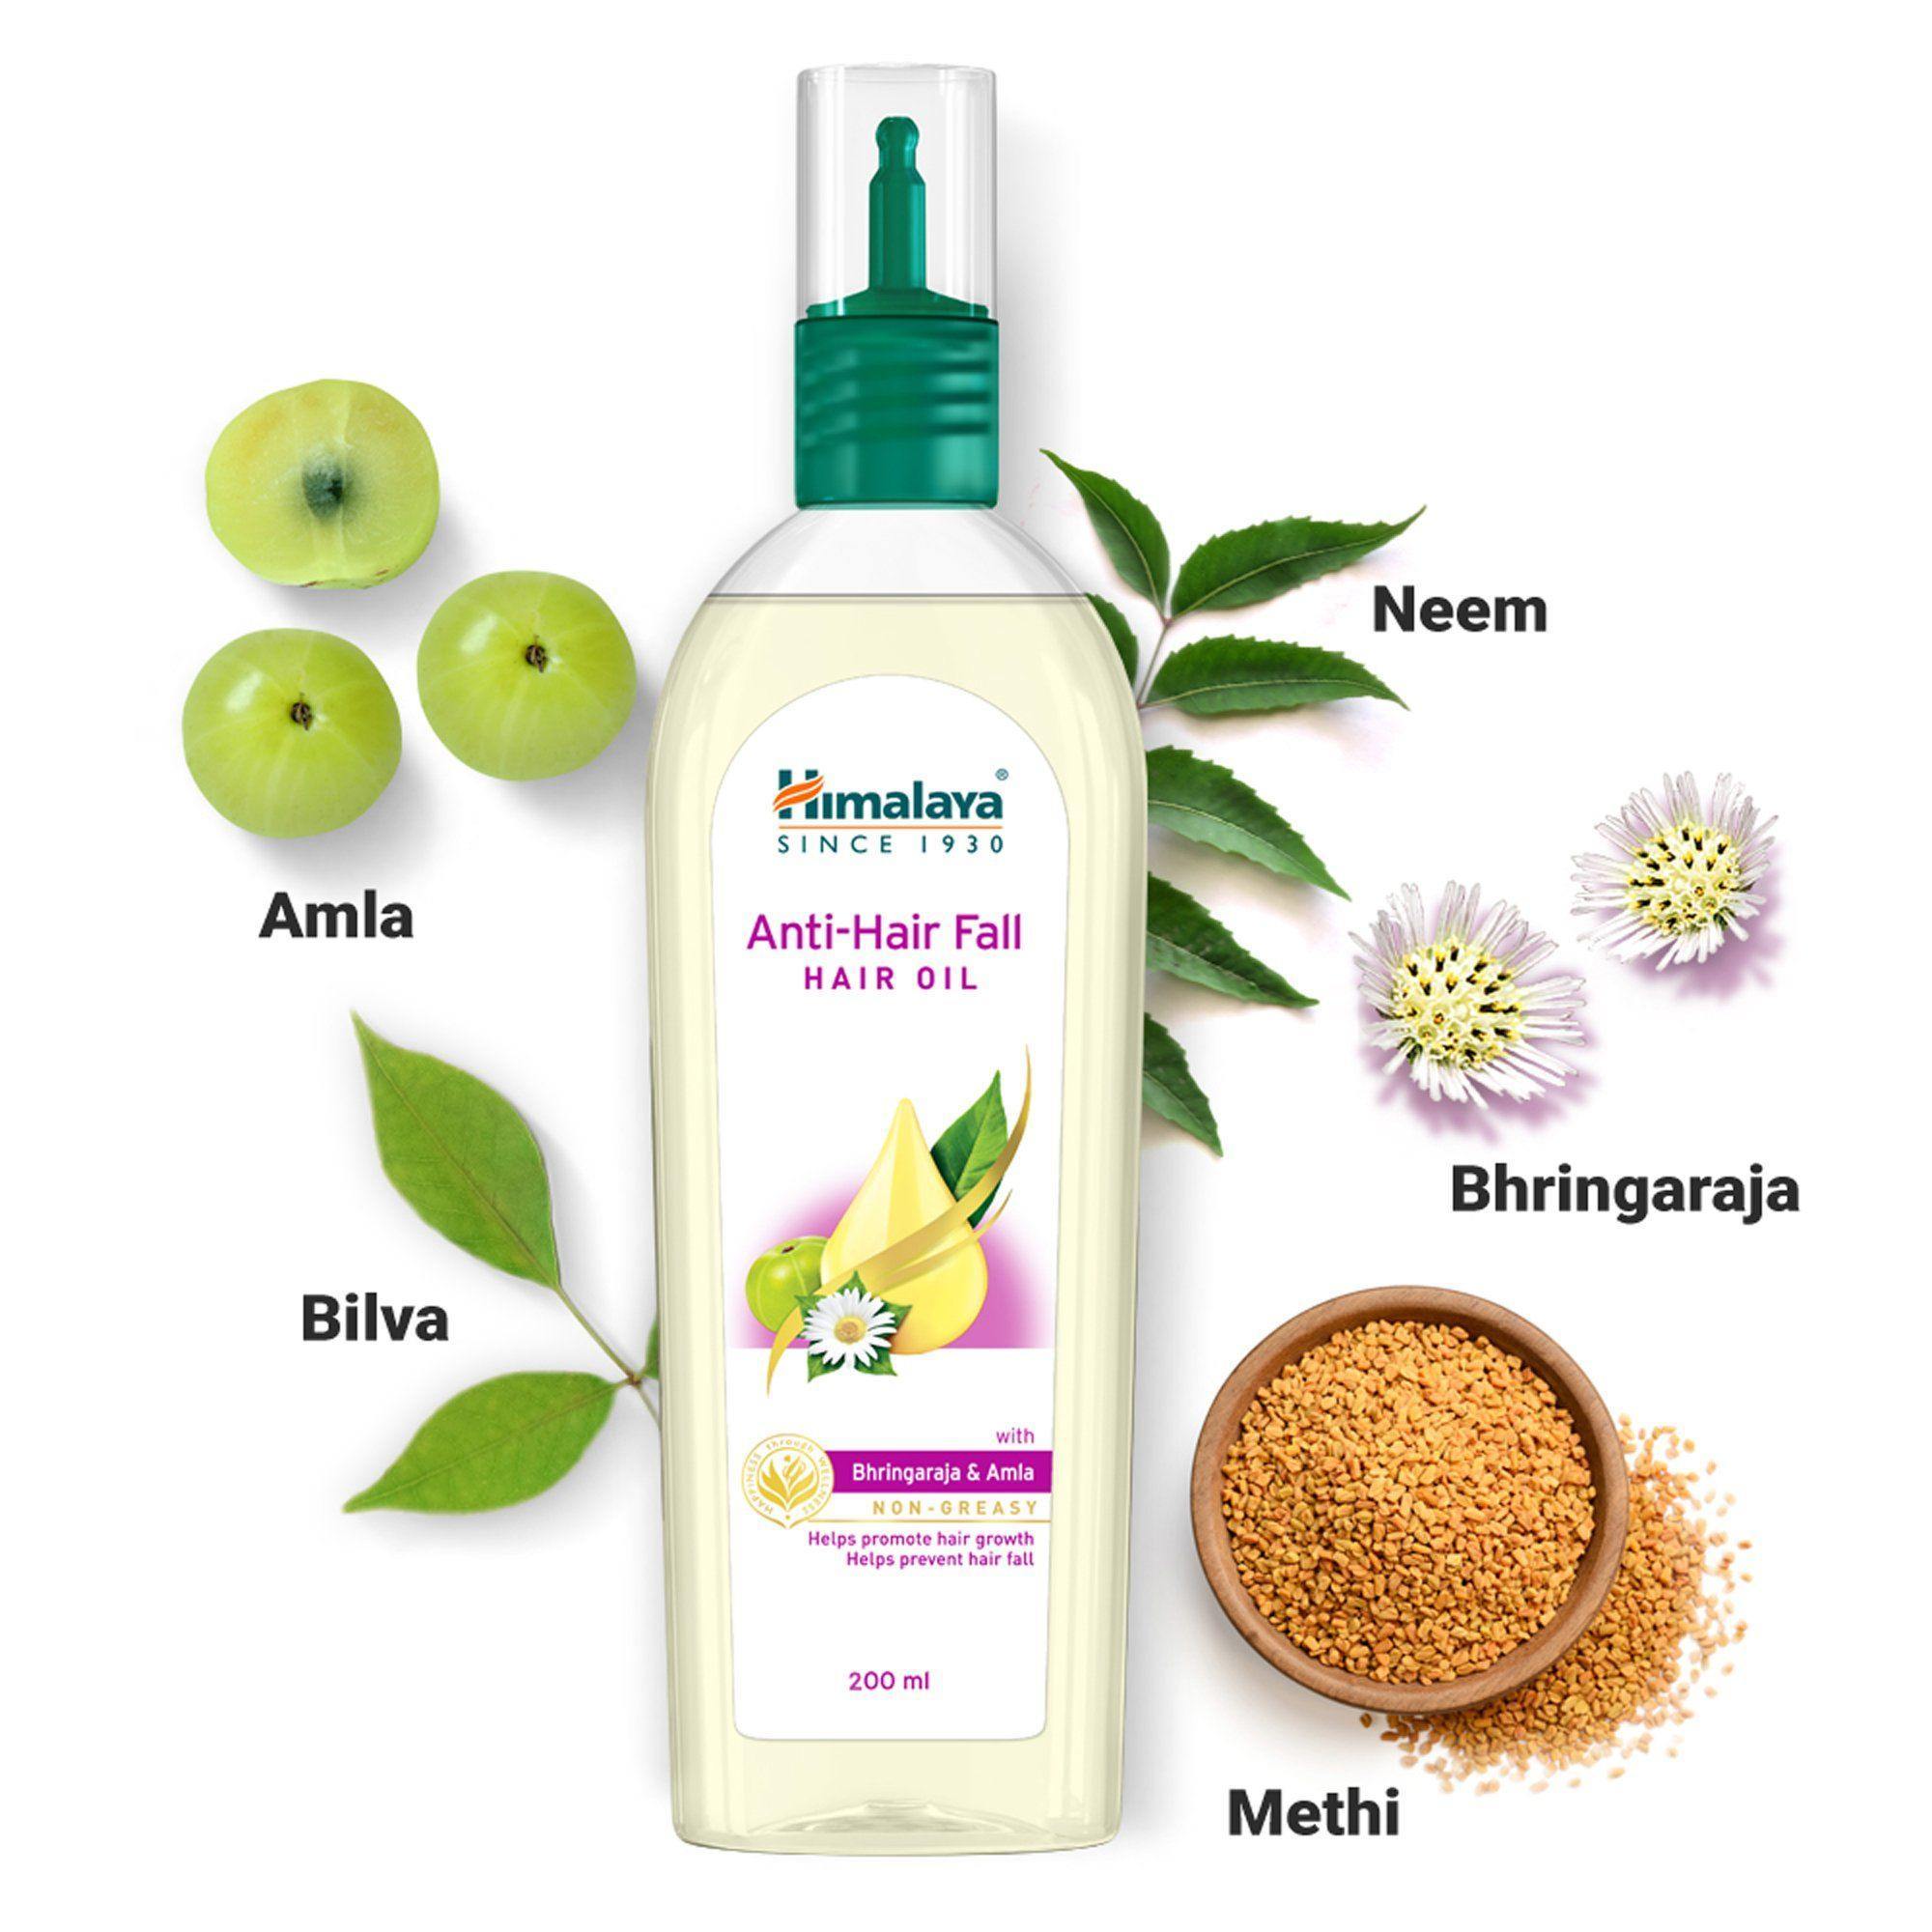 Himalaya Anti-Hair Fall Hair Oil 200ml - Product with Herbs